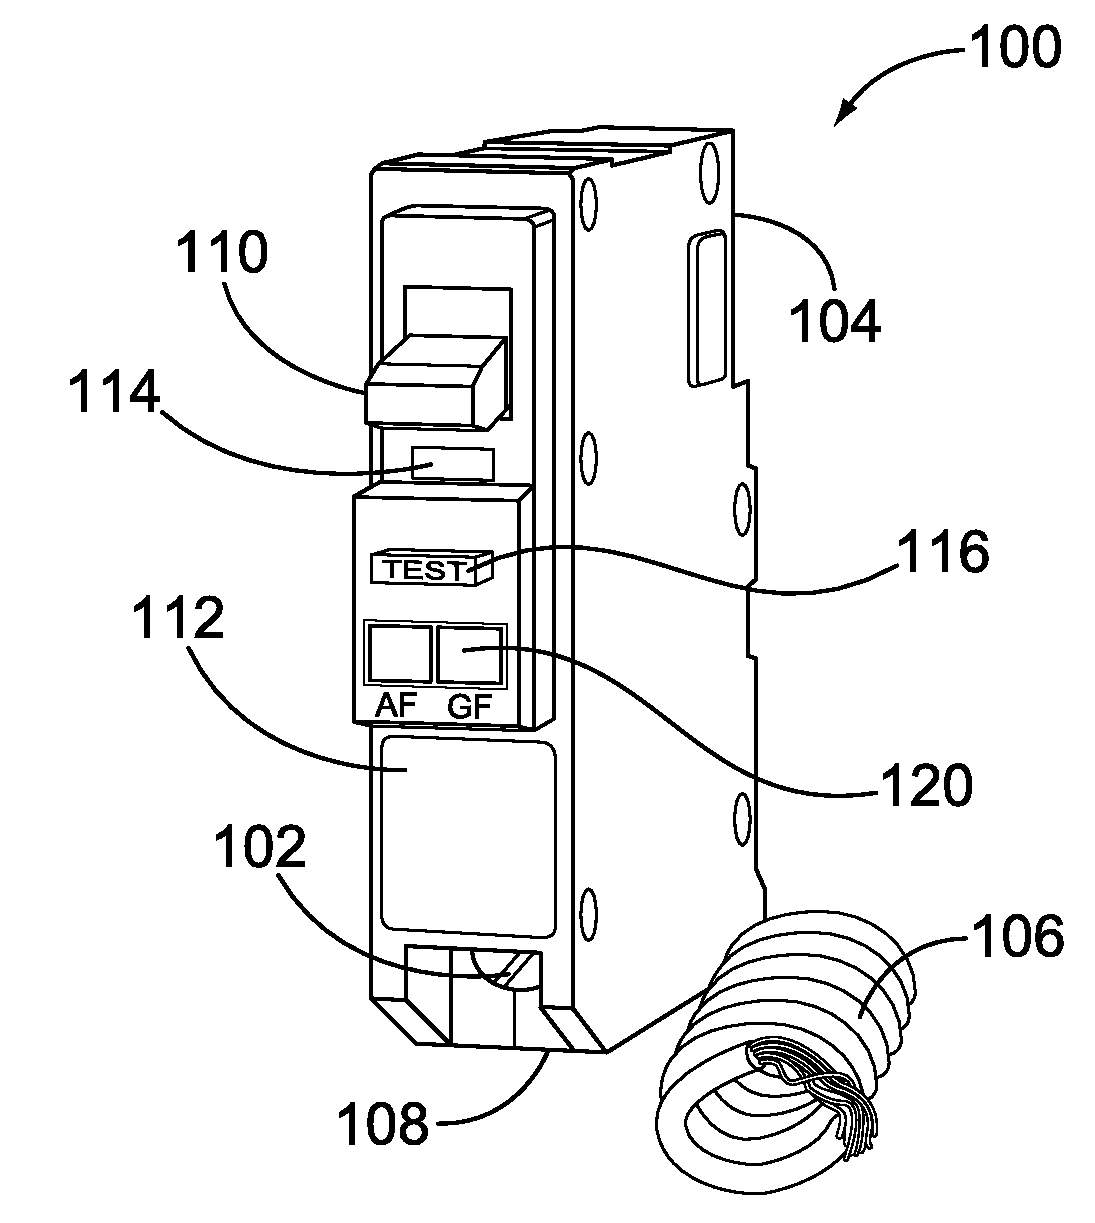 Circuit Breaker With Bistable Display